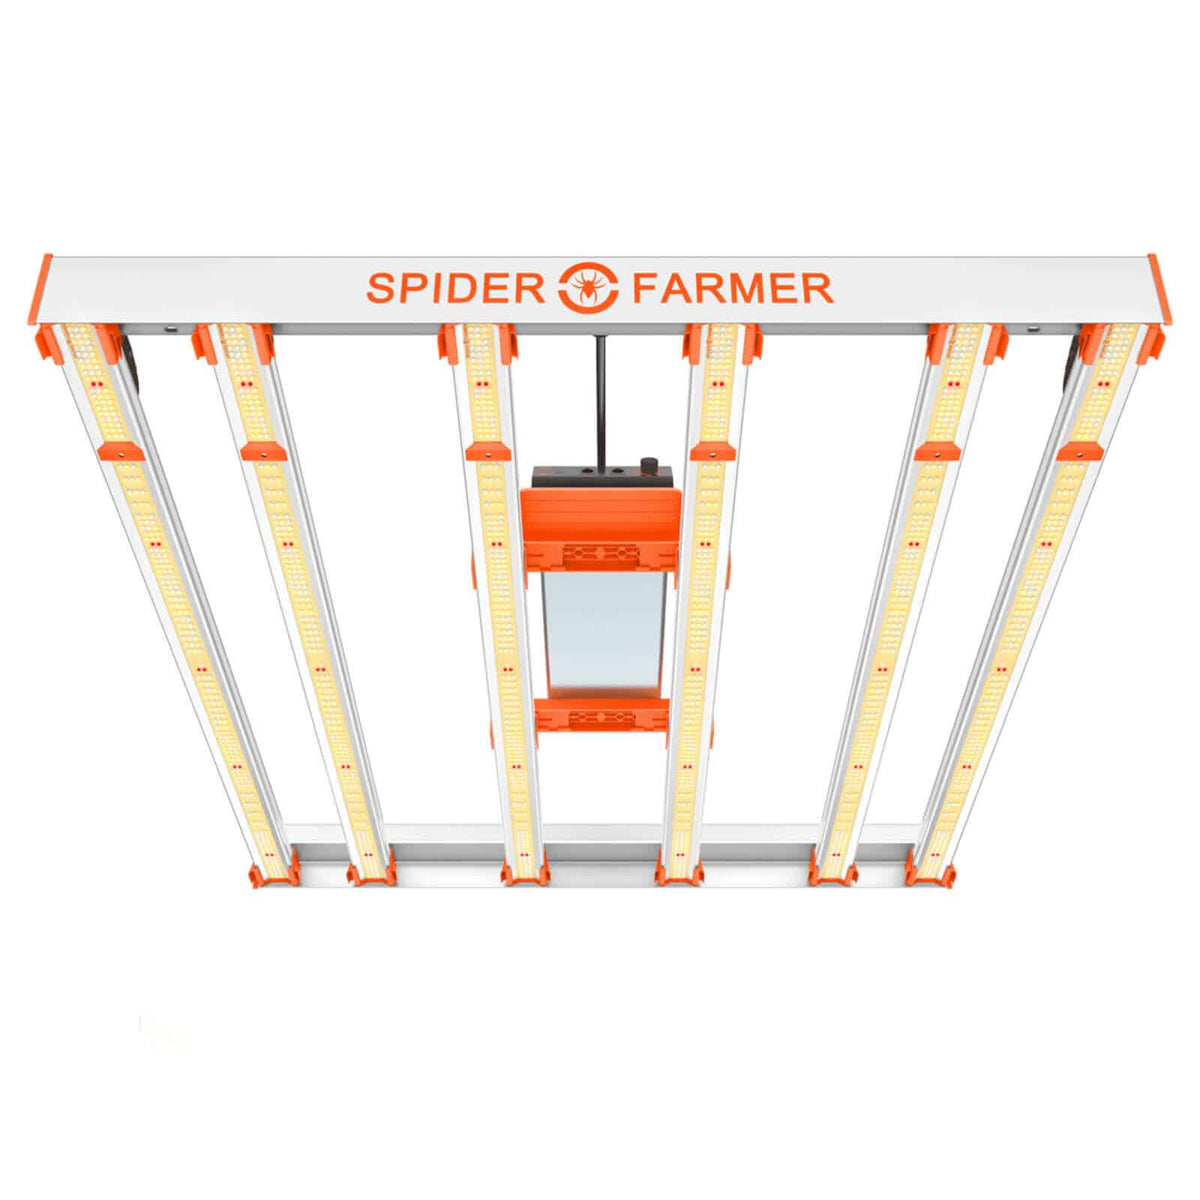 Spider Farmer Spider Farmer G5000 480W Dimmable Cost-effective Full Spectrum LED Grow Light